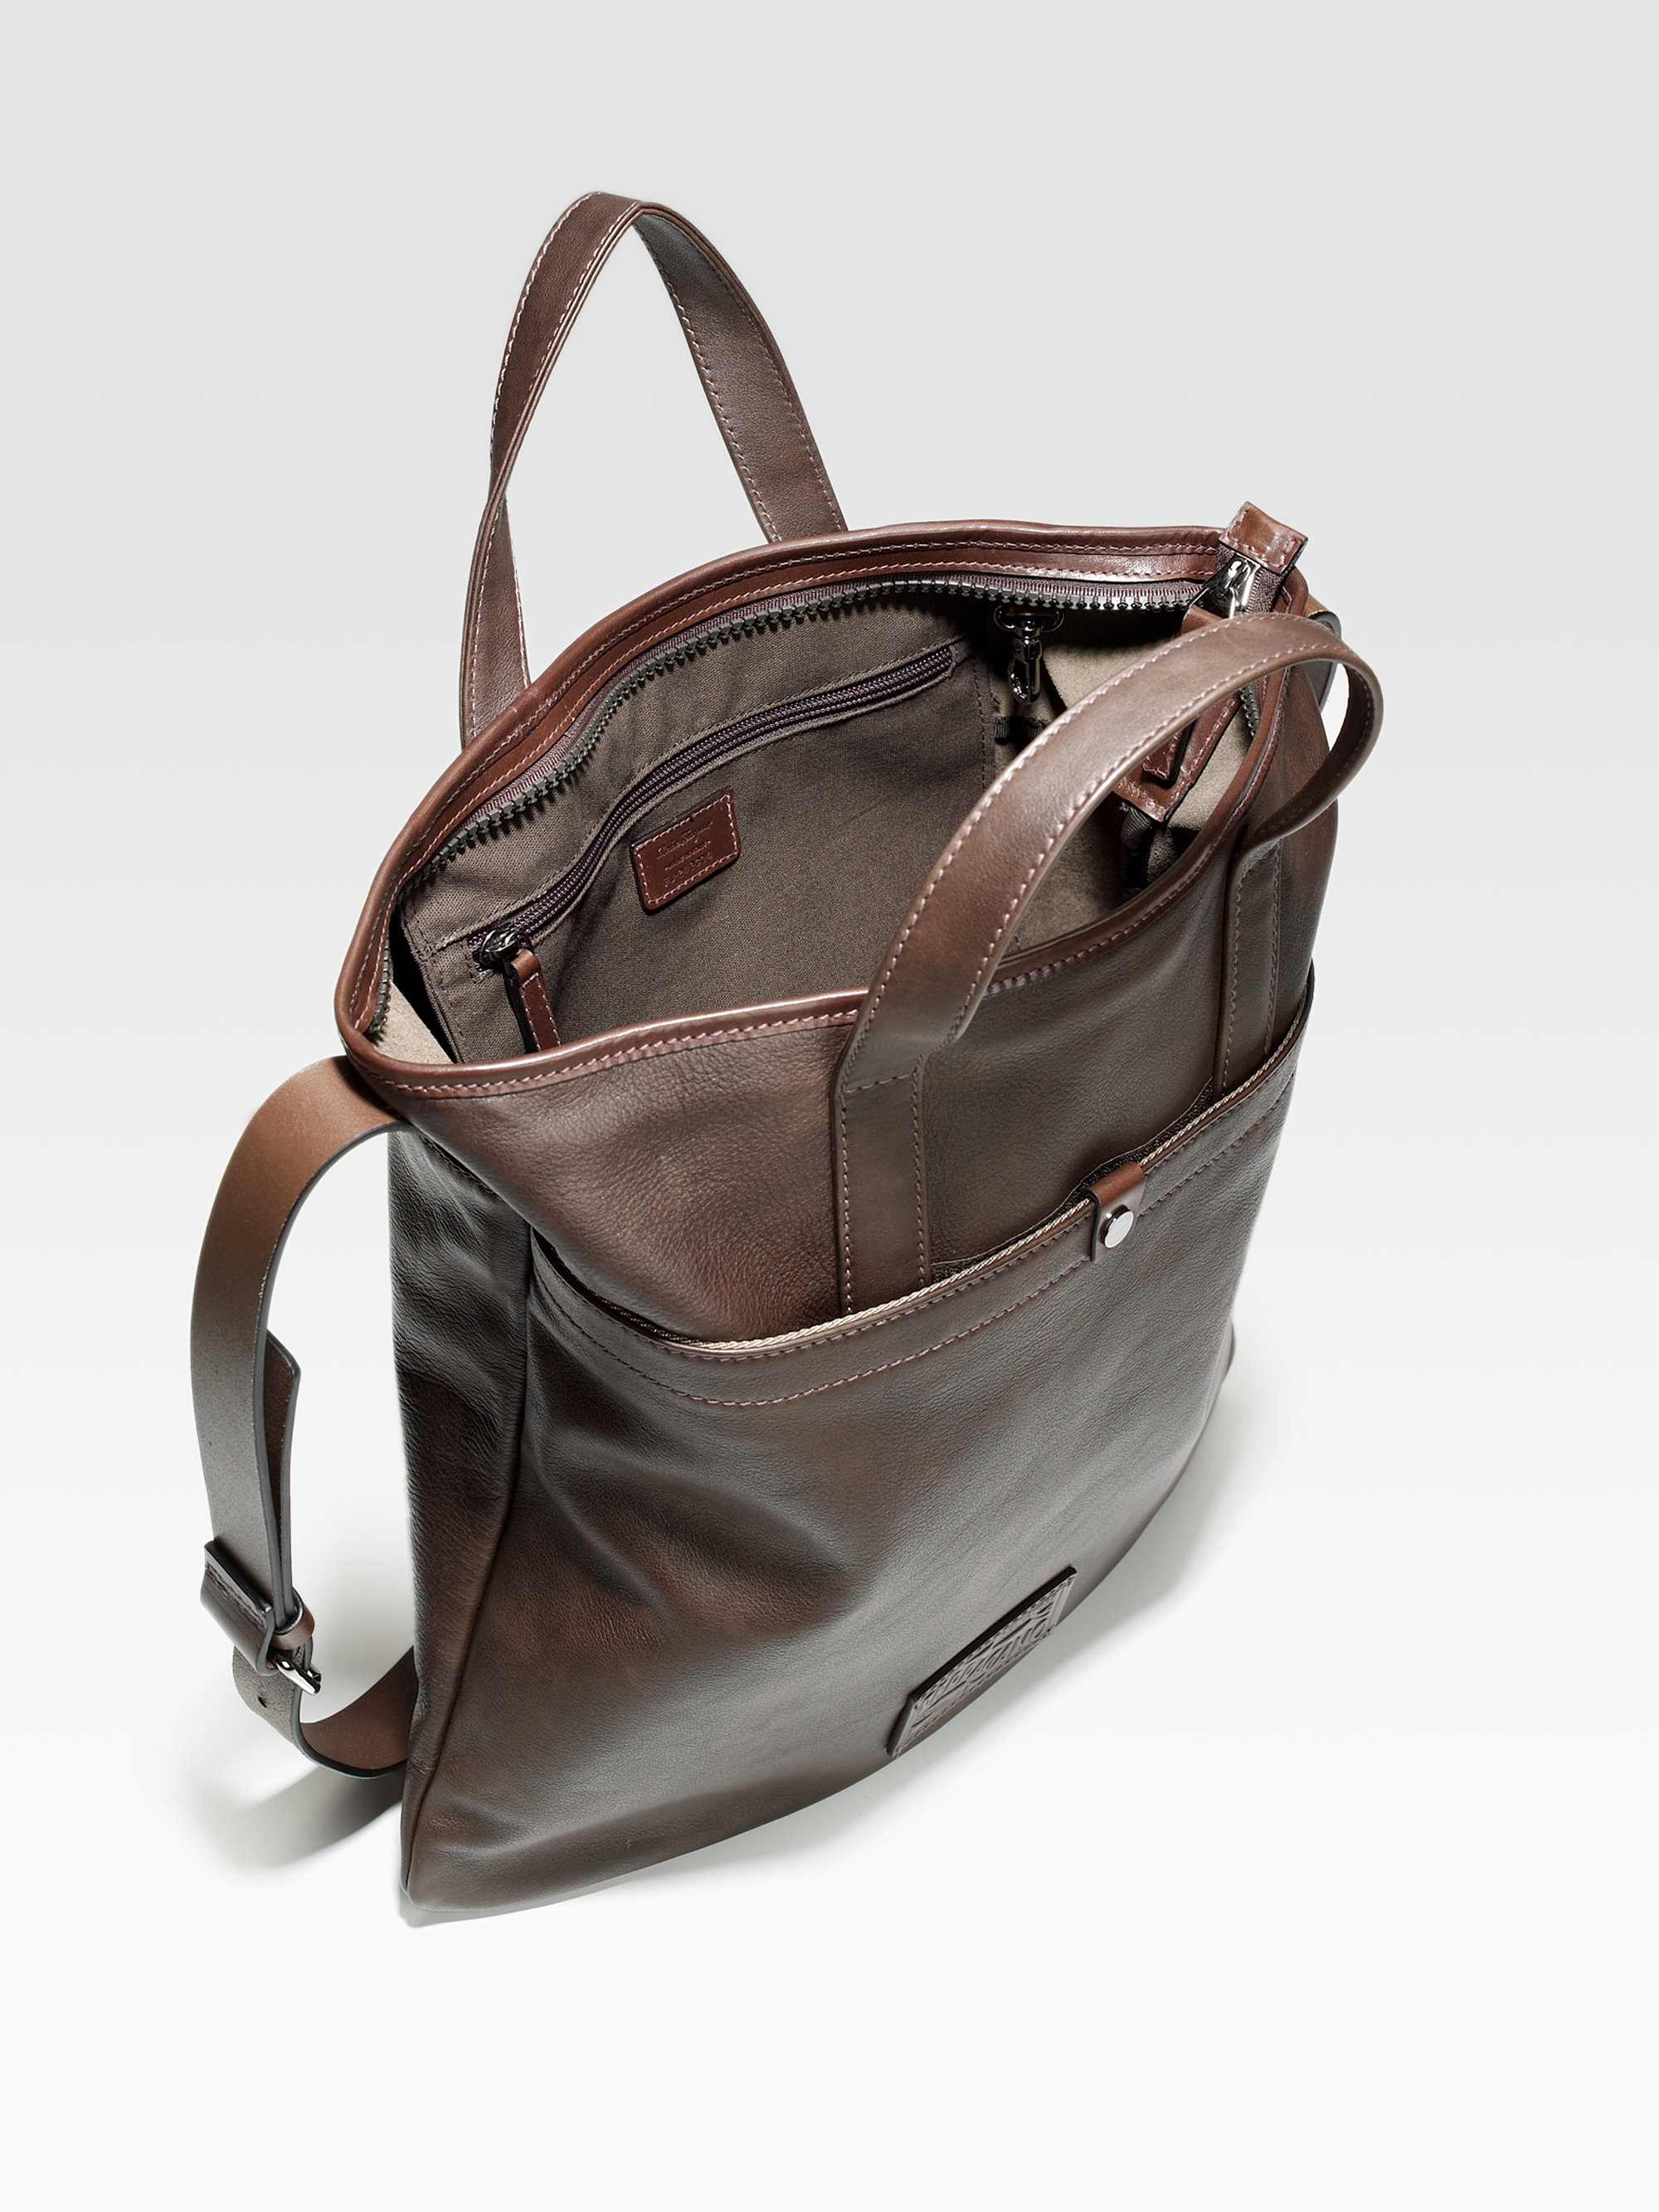 Lyst - Ferragamo Leather Tote Bag in Brown for Men